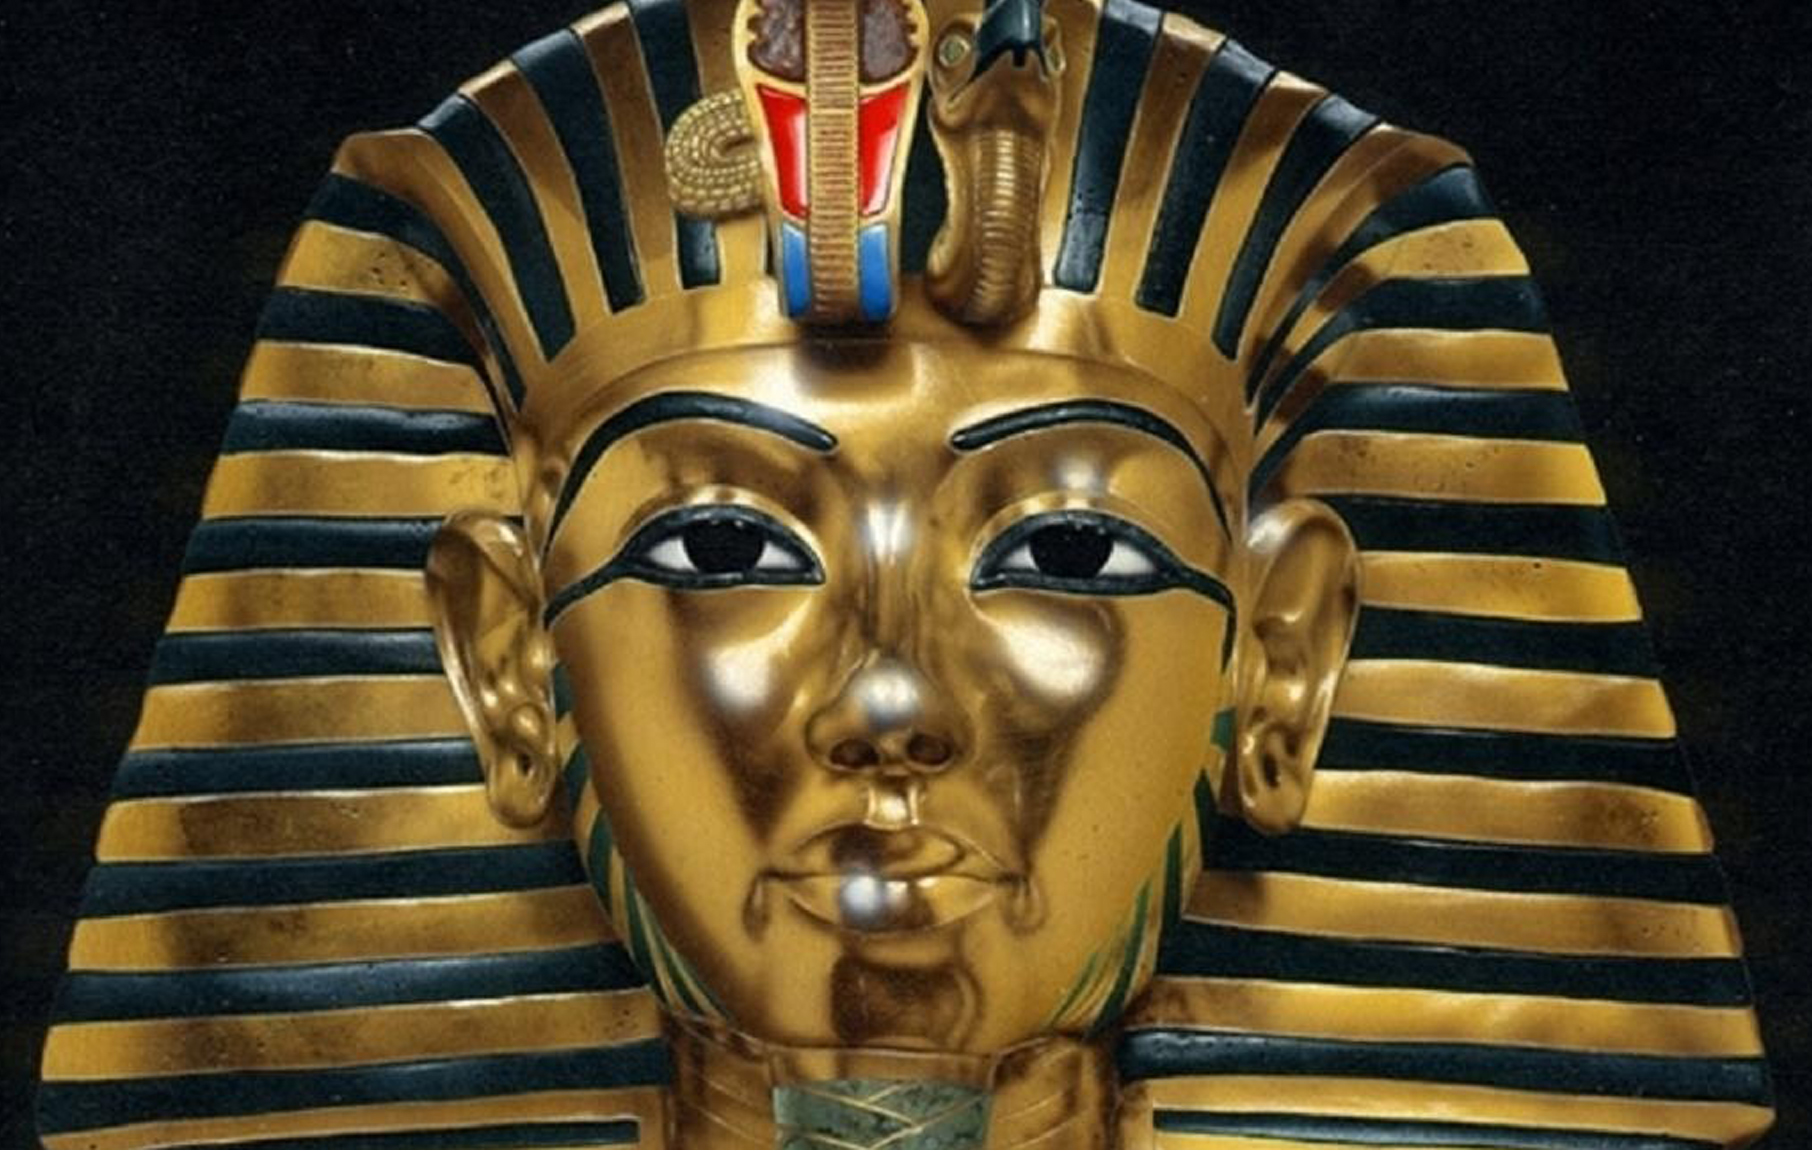 The gold mask of Tutankhamun